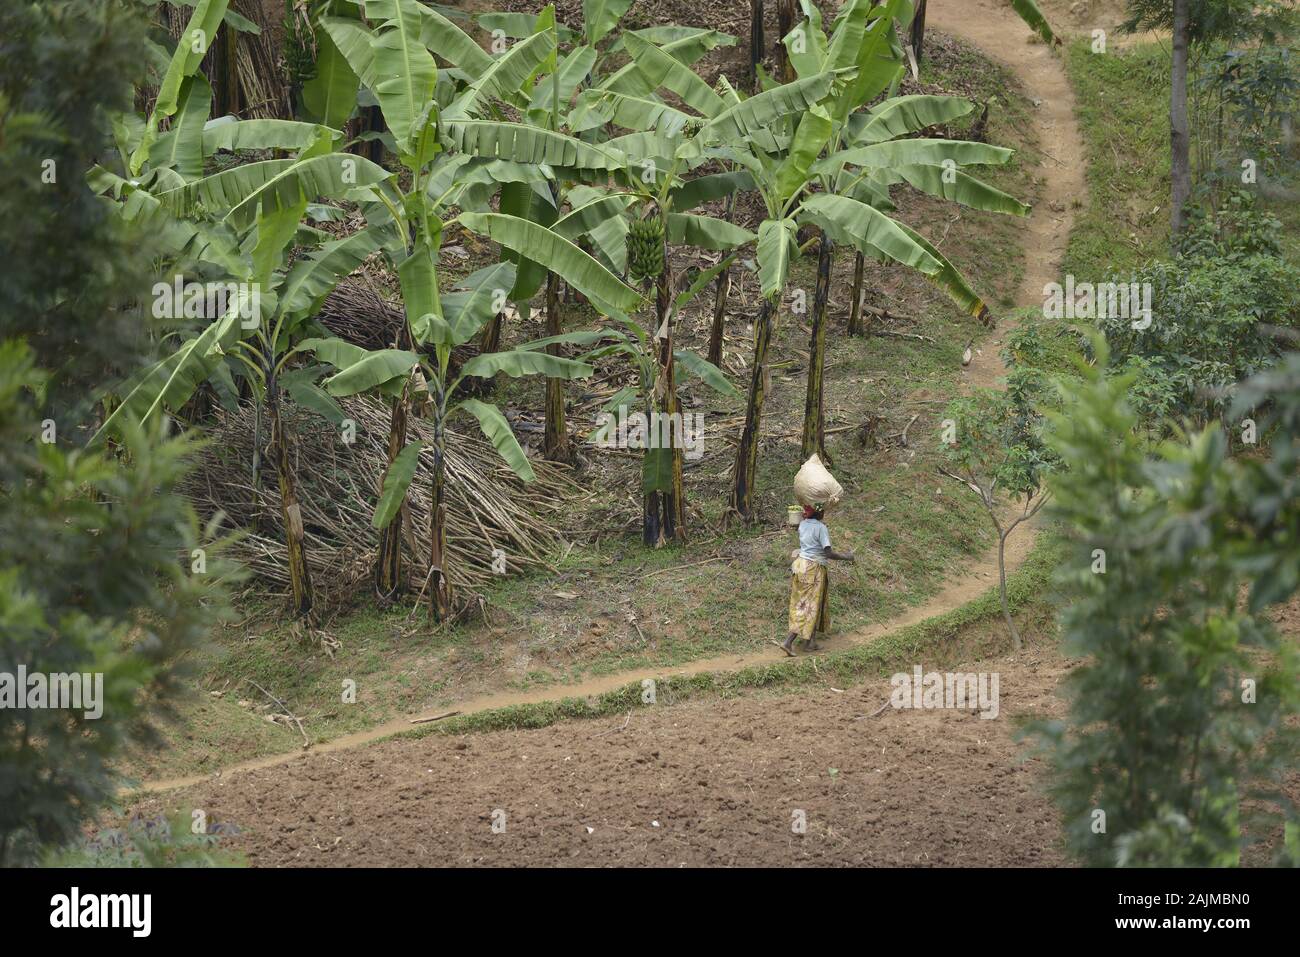 Woman walking among sown fields near Karongi, Kibuye, Rwanda. Stock Photo